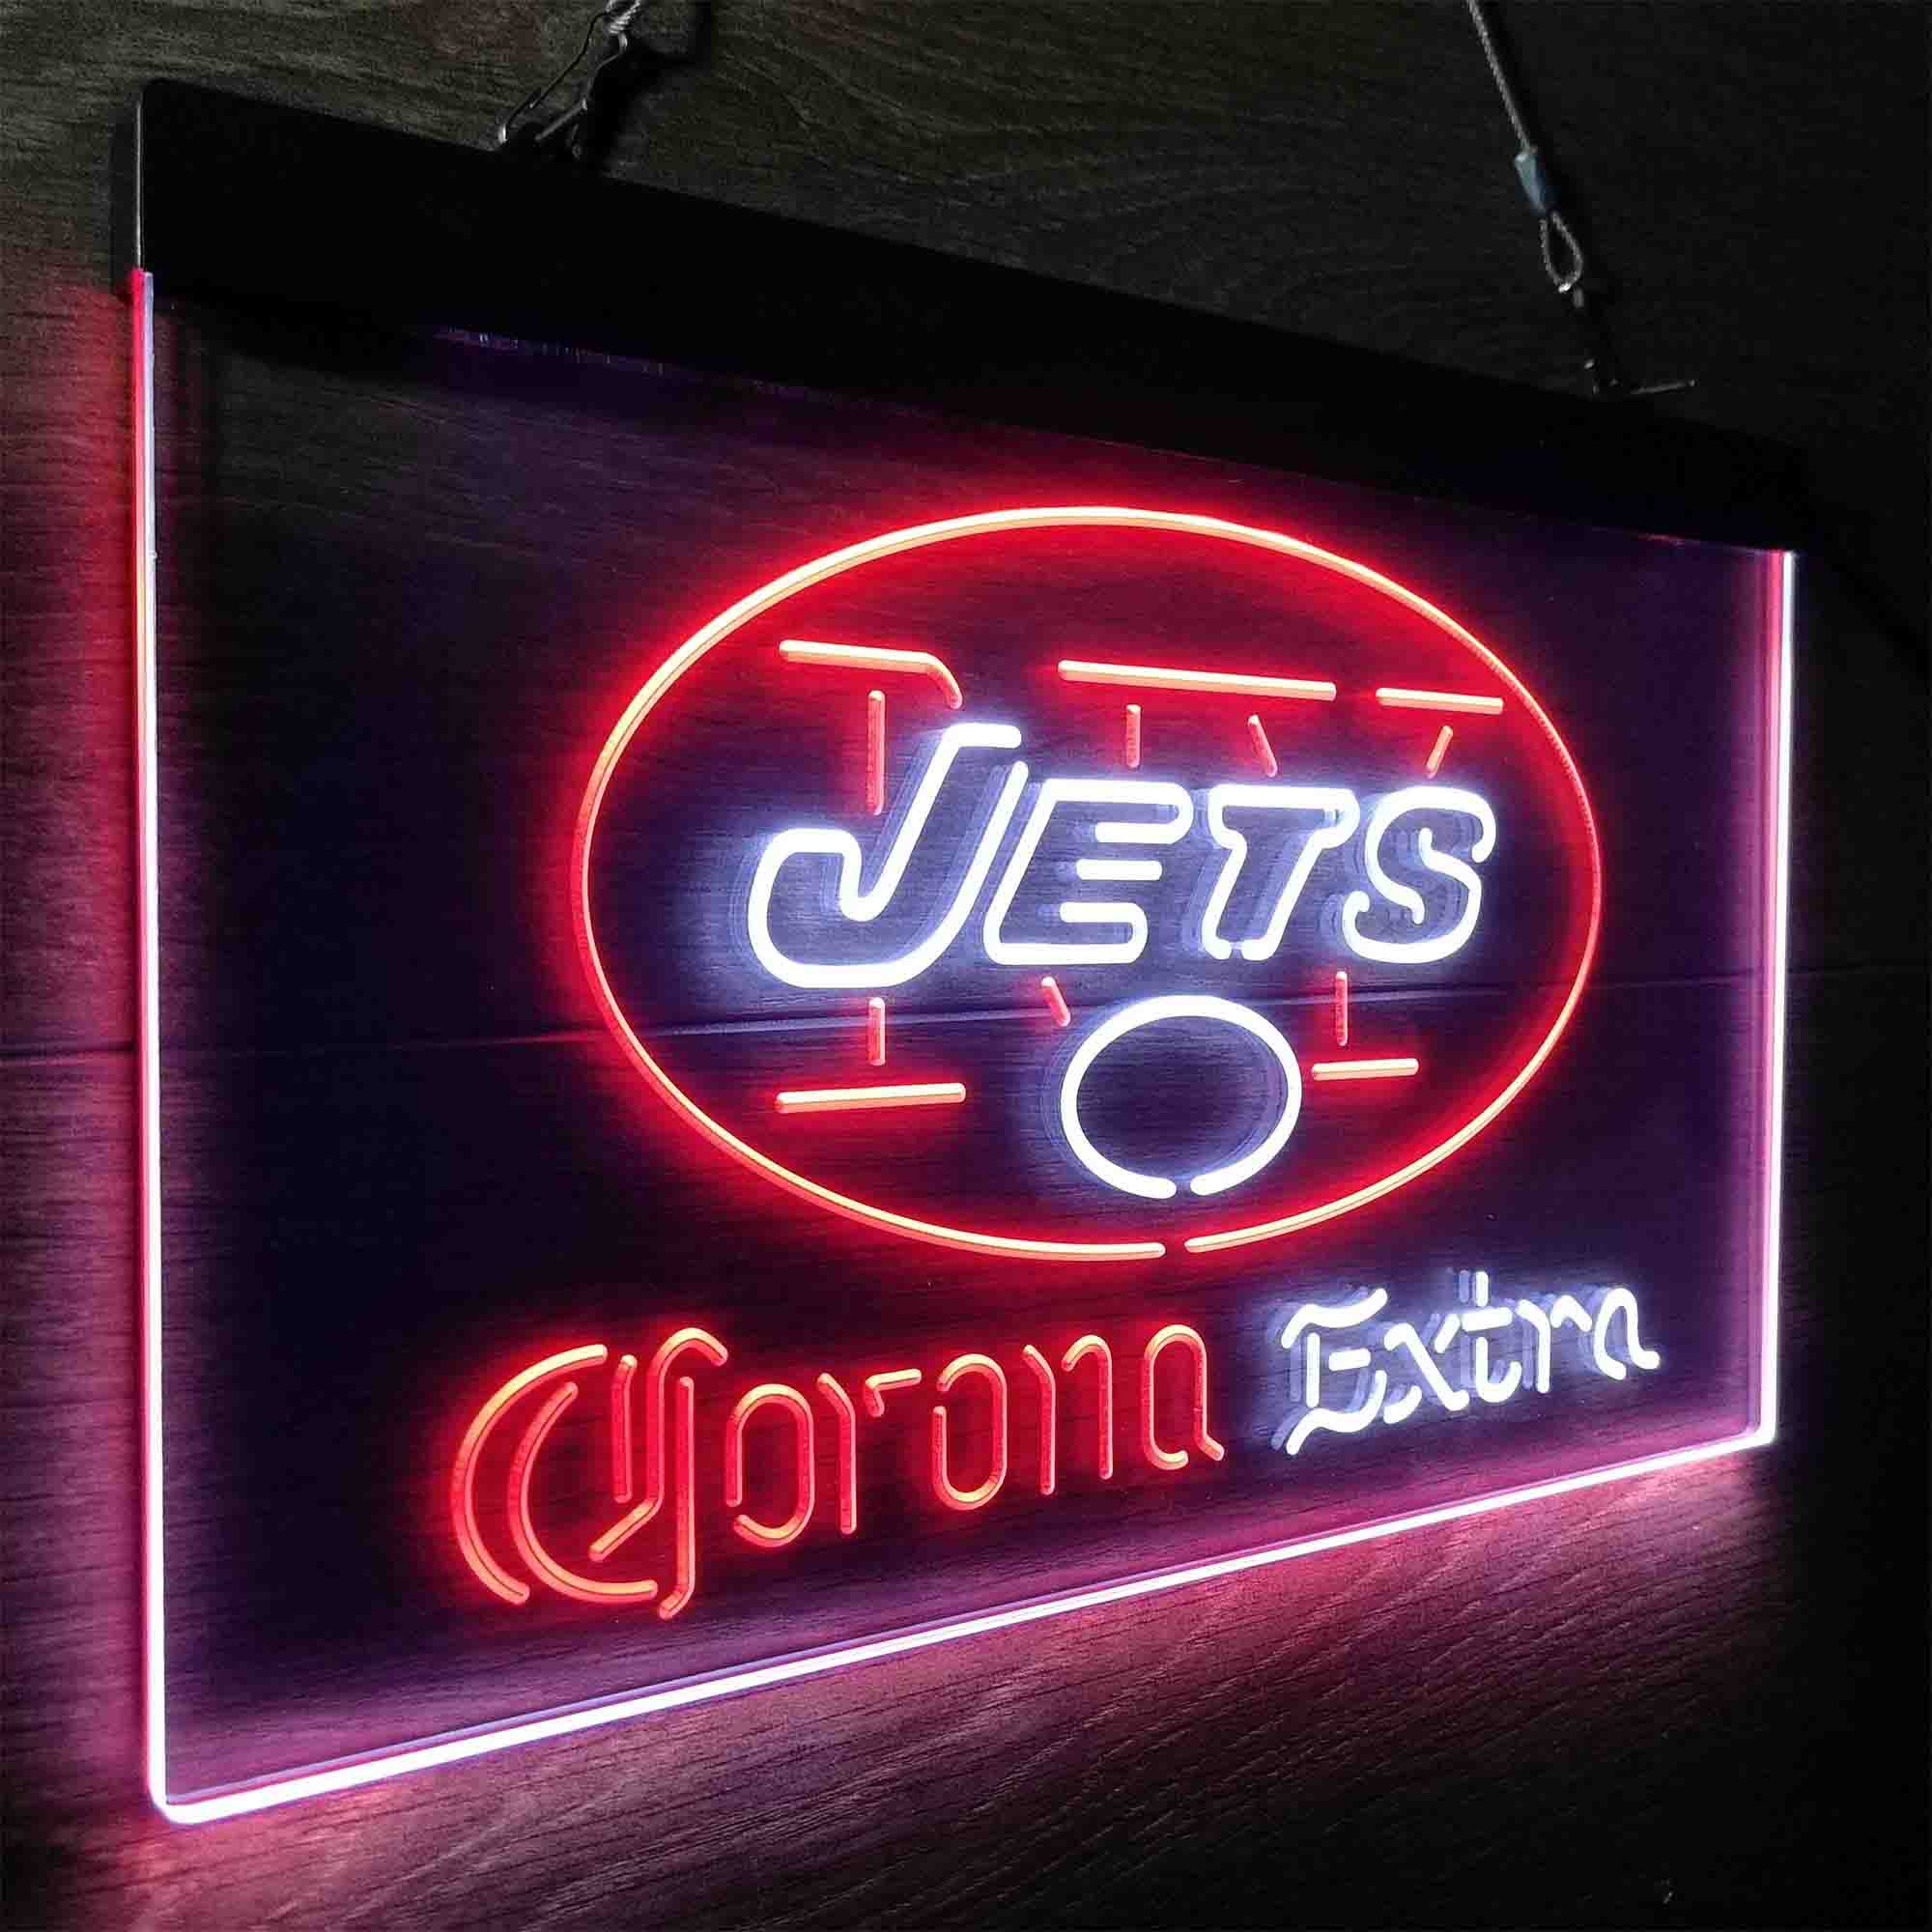 New York Jets Corona Extra Bar Neon-Like LED Sign - ProLedSign